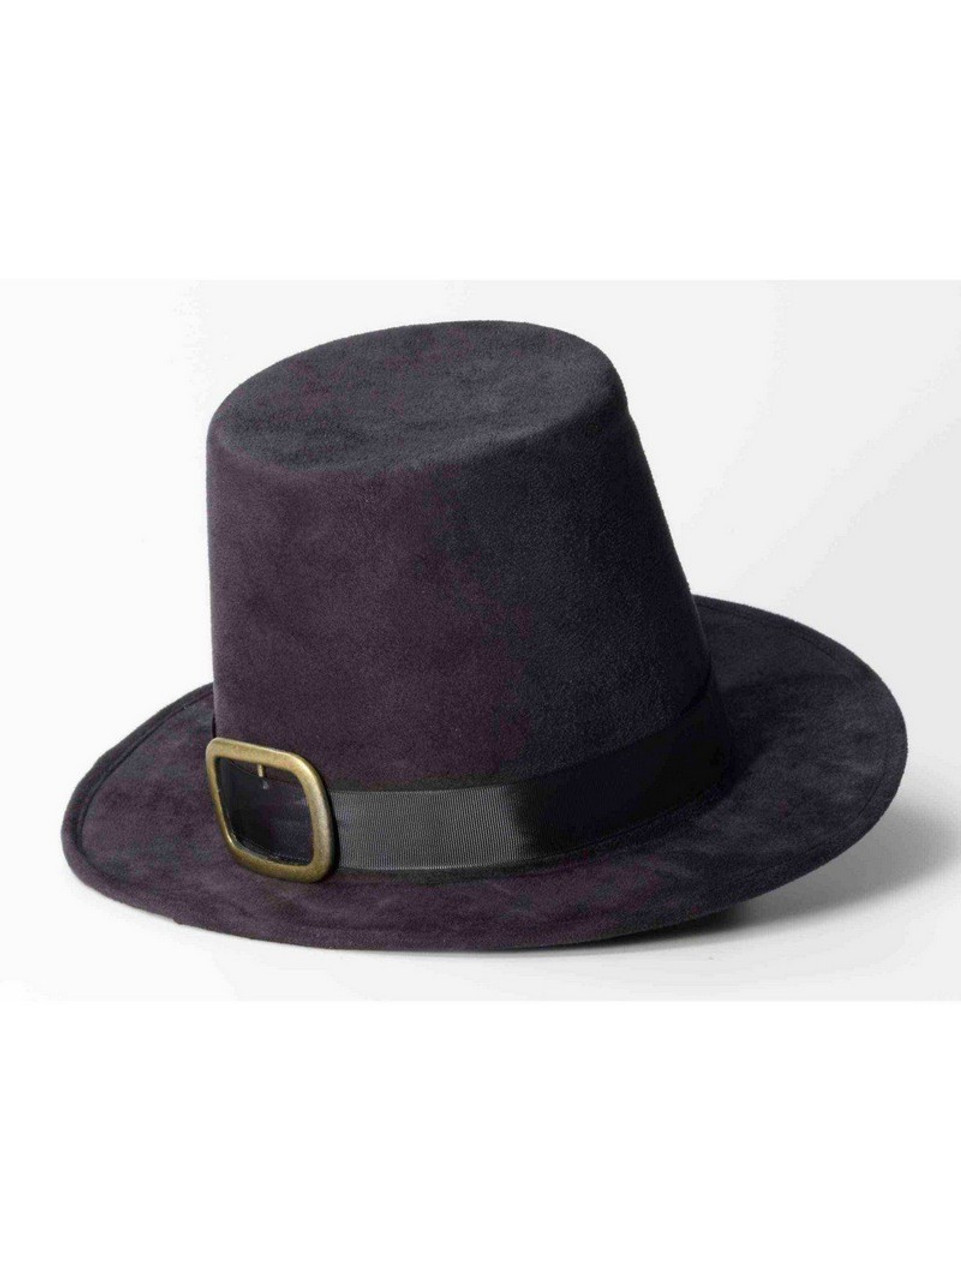 Deluxe Black Pilgrim Hat